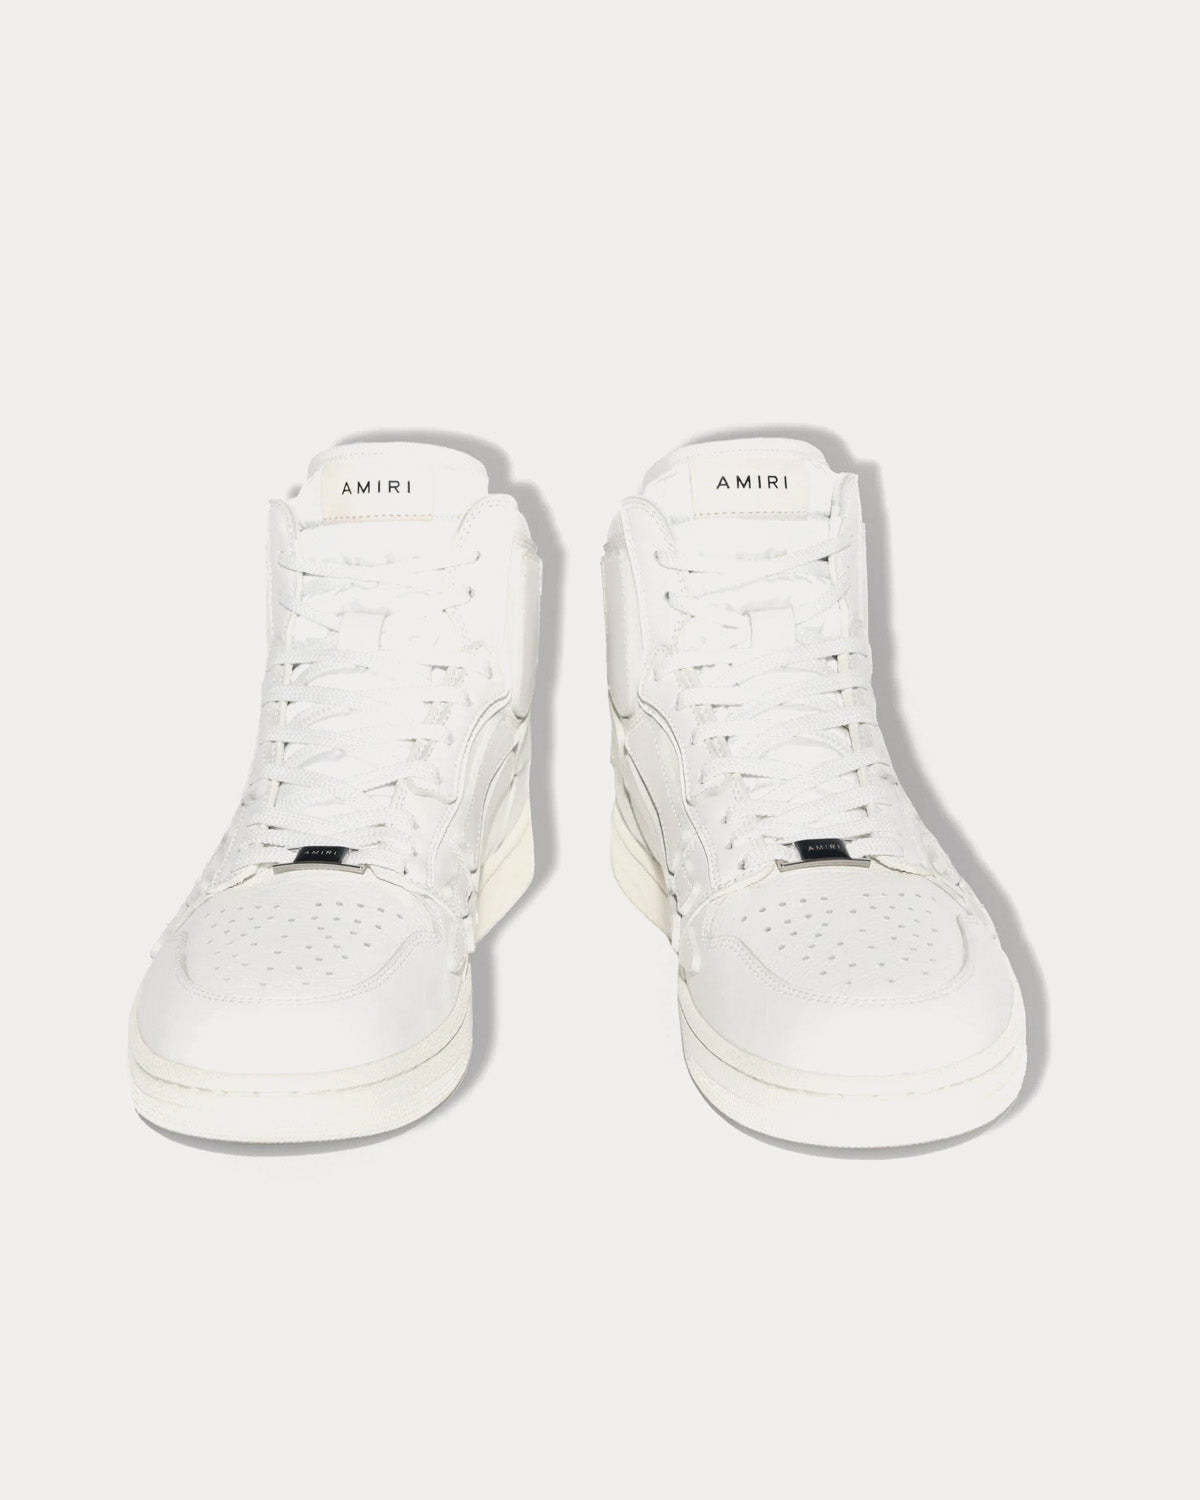 AMIRI - Skel-Top Hi White High Top Sneakers